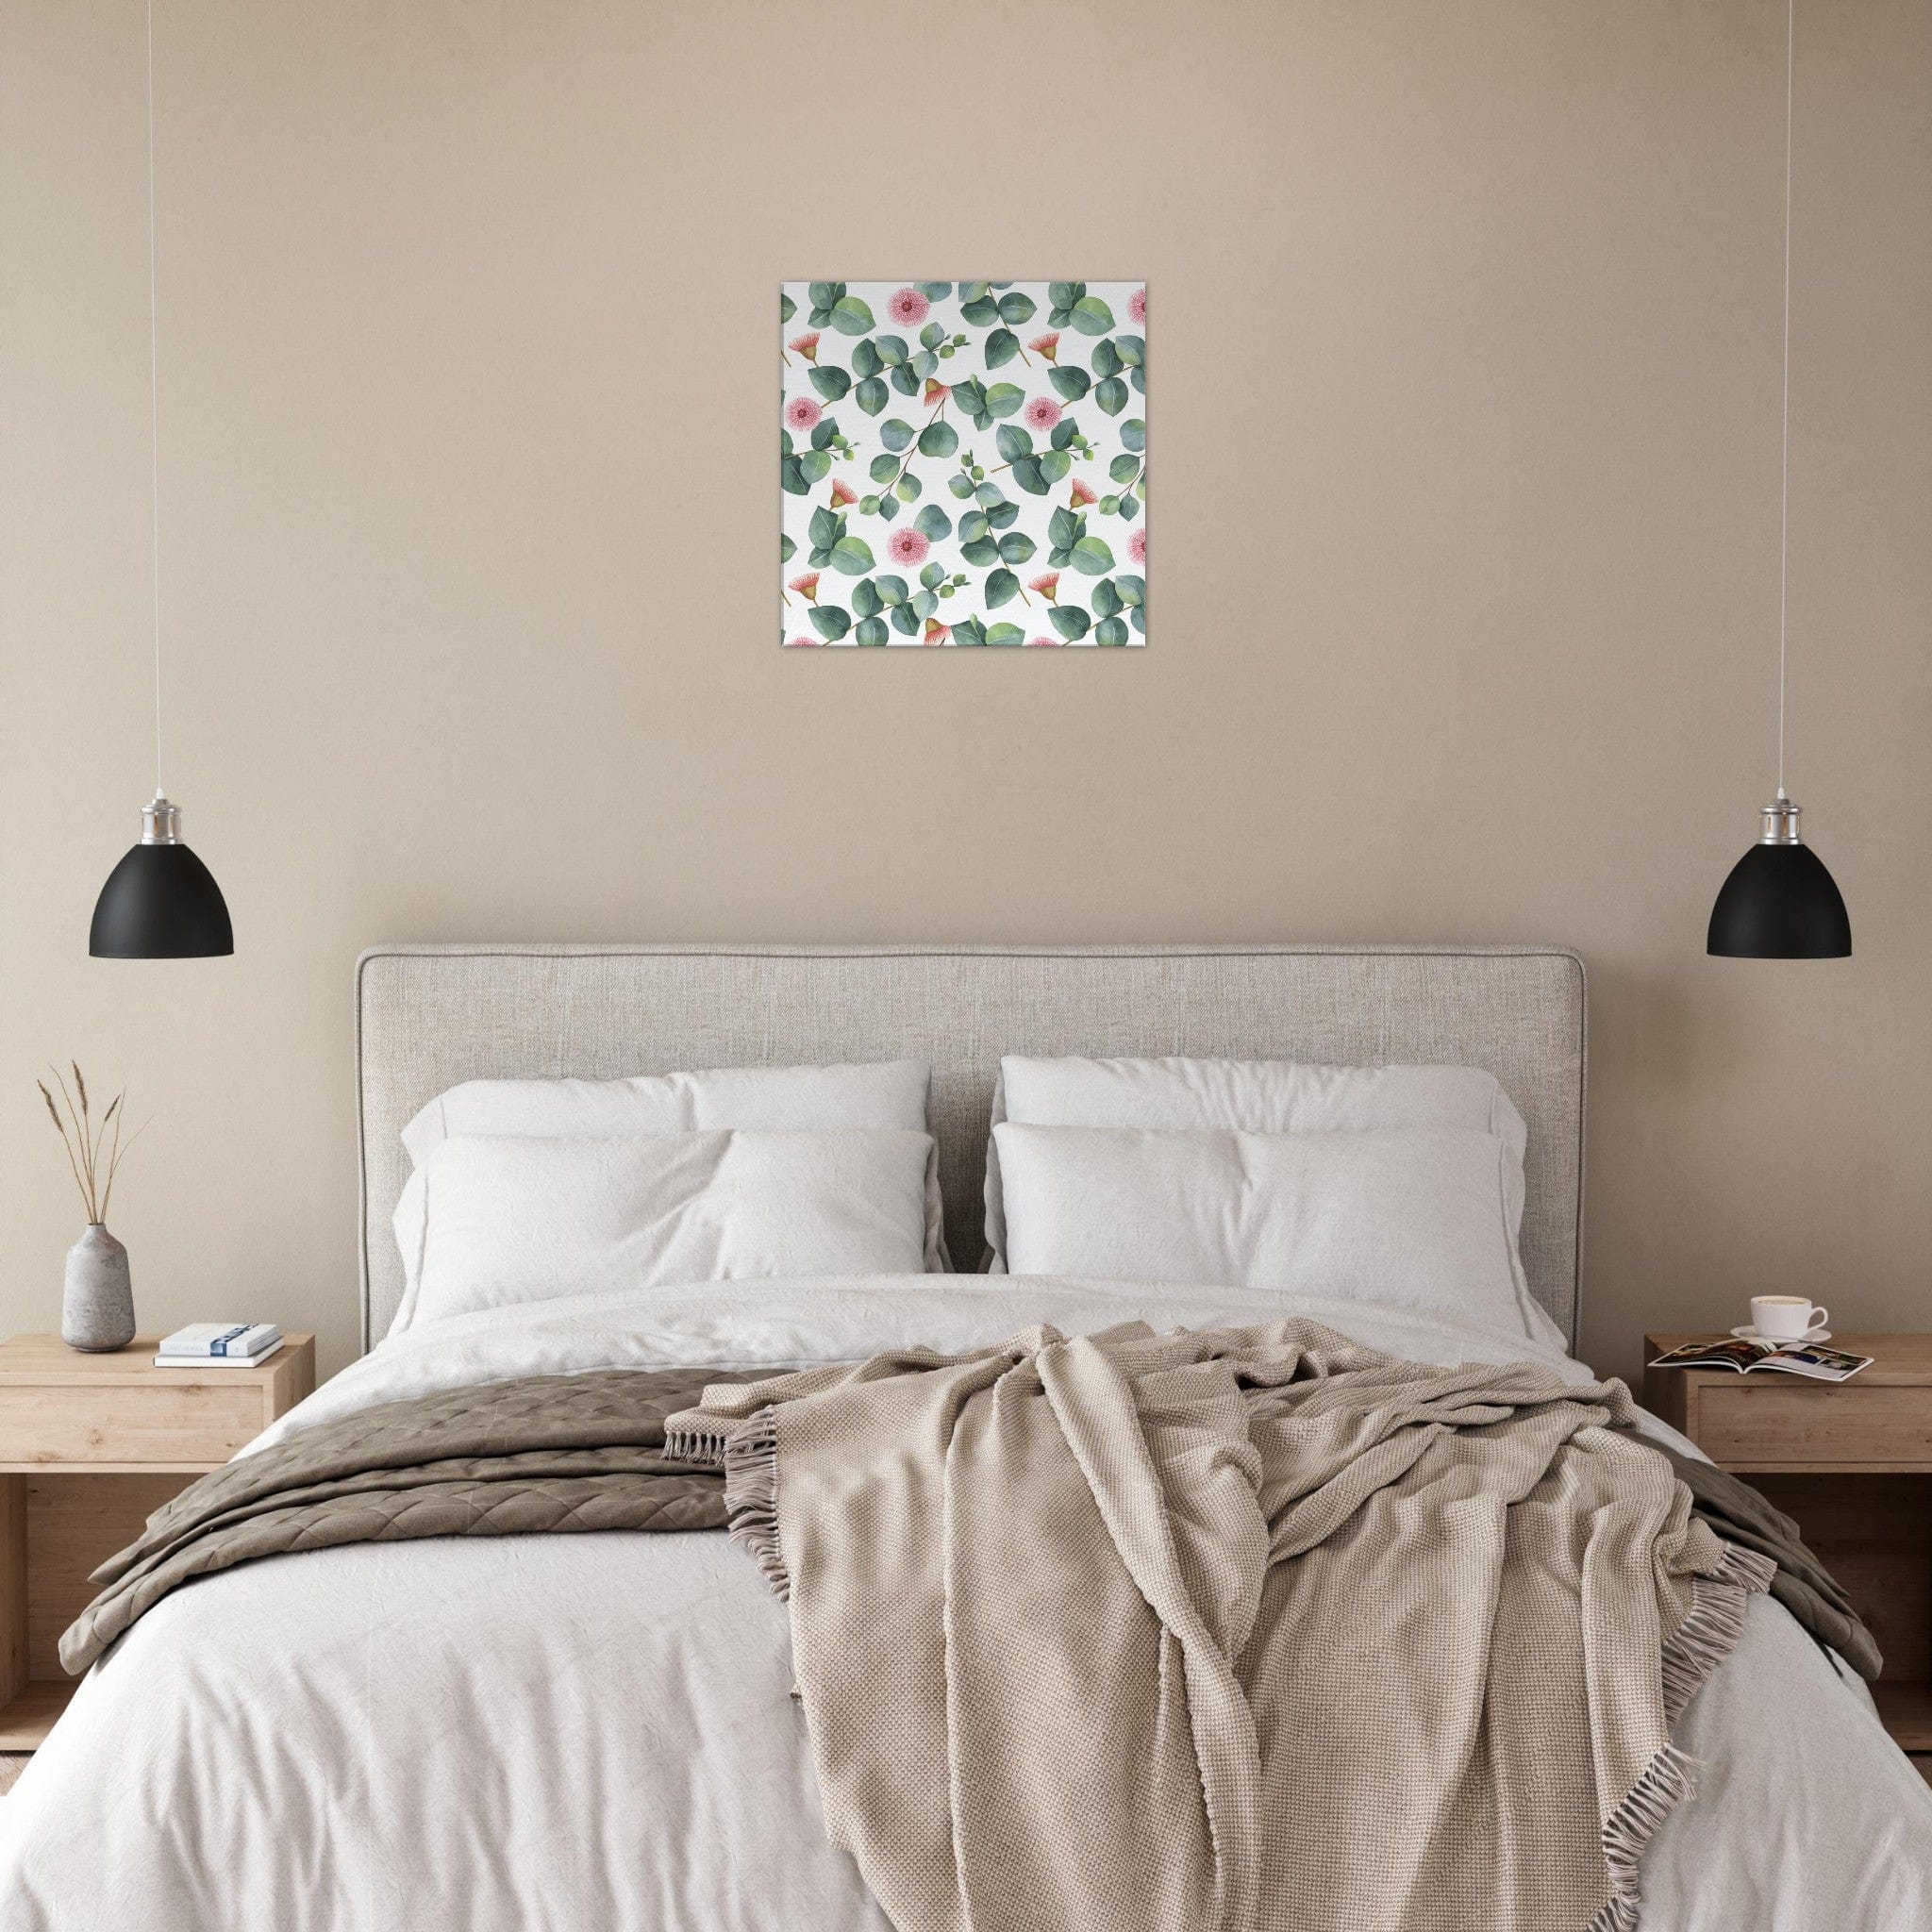 Little Squiffy Print Material 60x60 cm / 24x24″ / Vertical Eucalyptus Blossom Canvas Wall Art